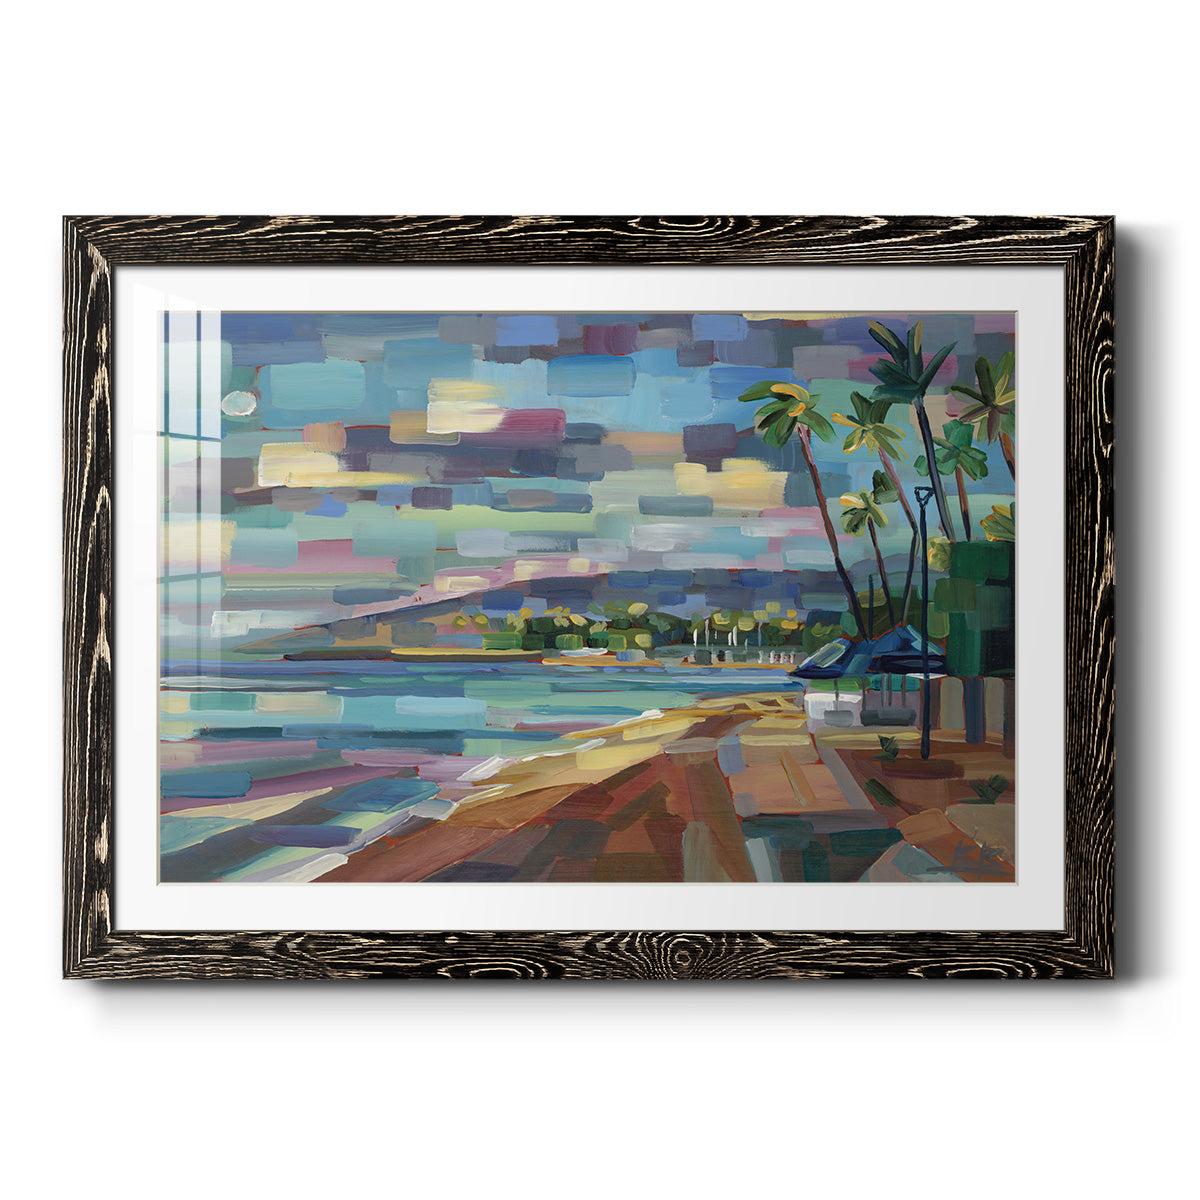 Morning Moon Over Waikiki-Premium Framed Print - Ready to Hang